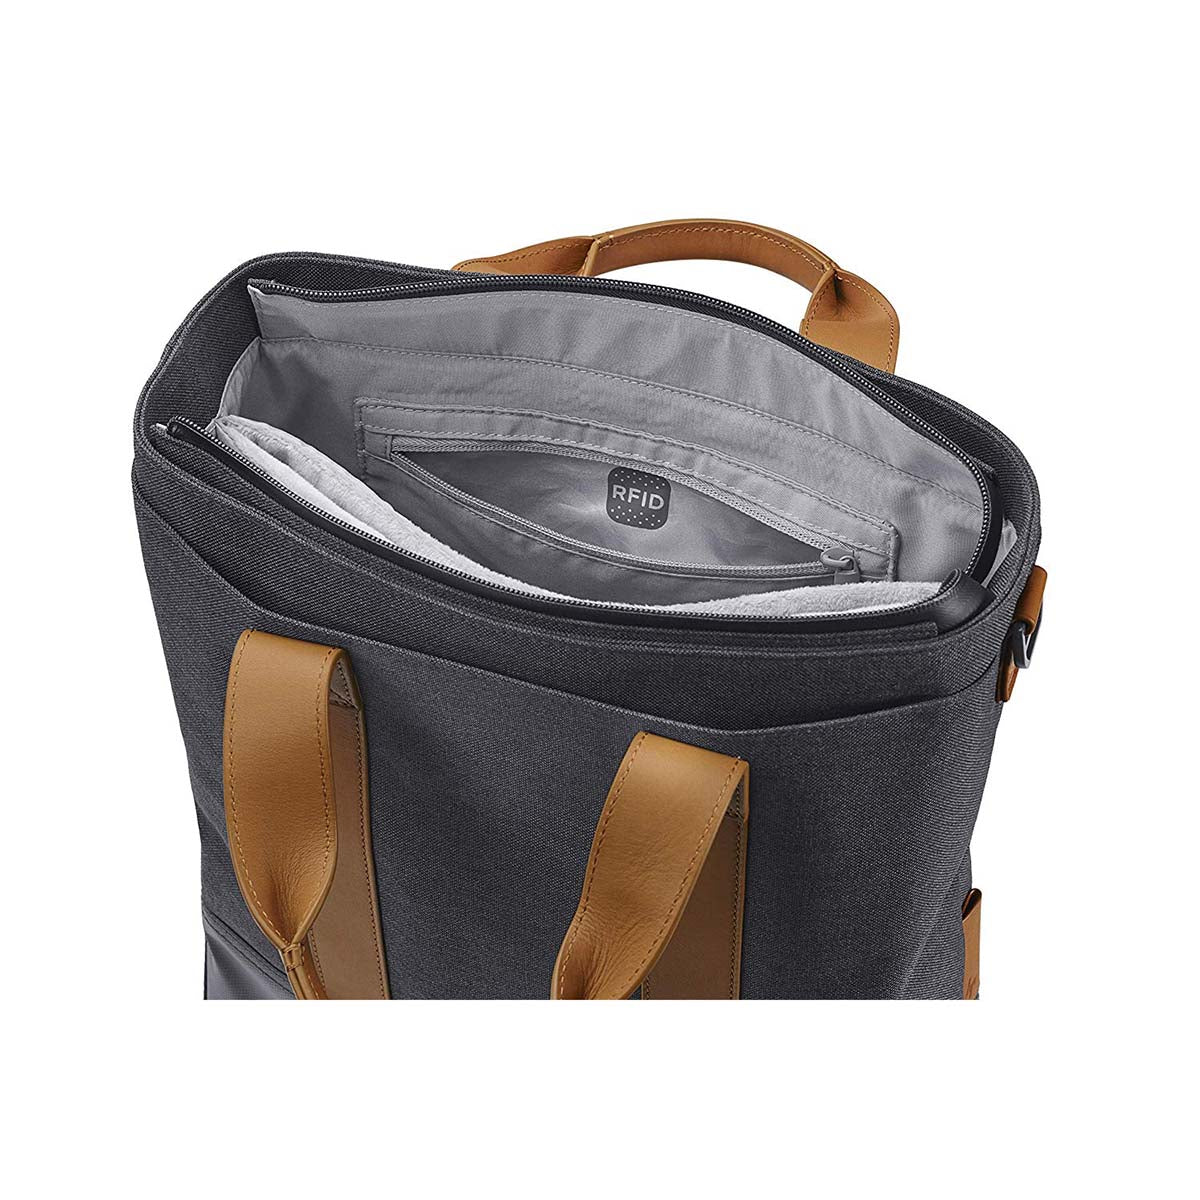 HP Envy Urban 14 Tote Bag with RFID Blocking Pockets